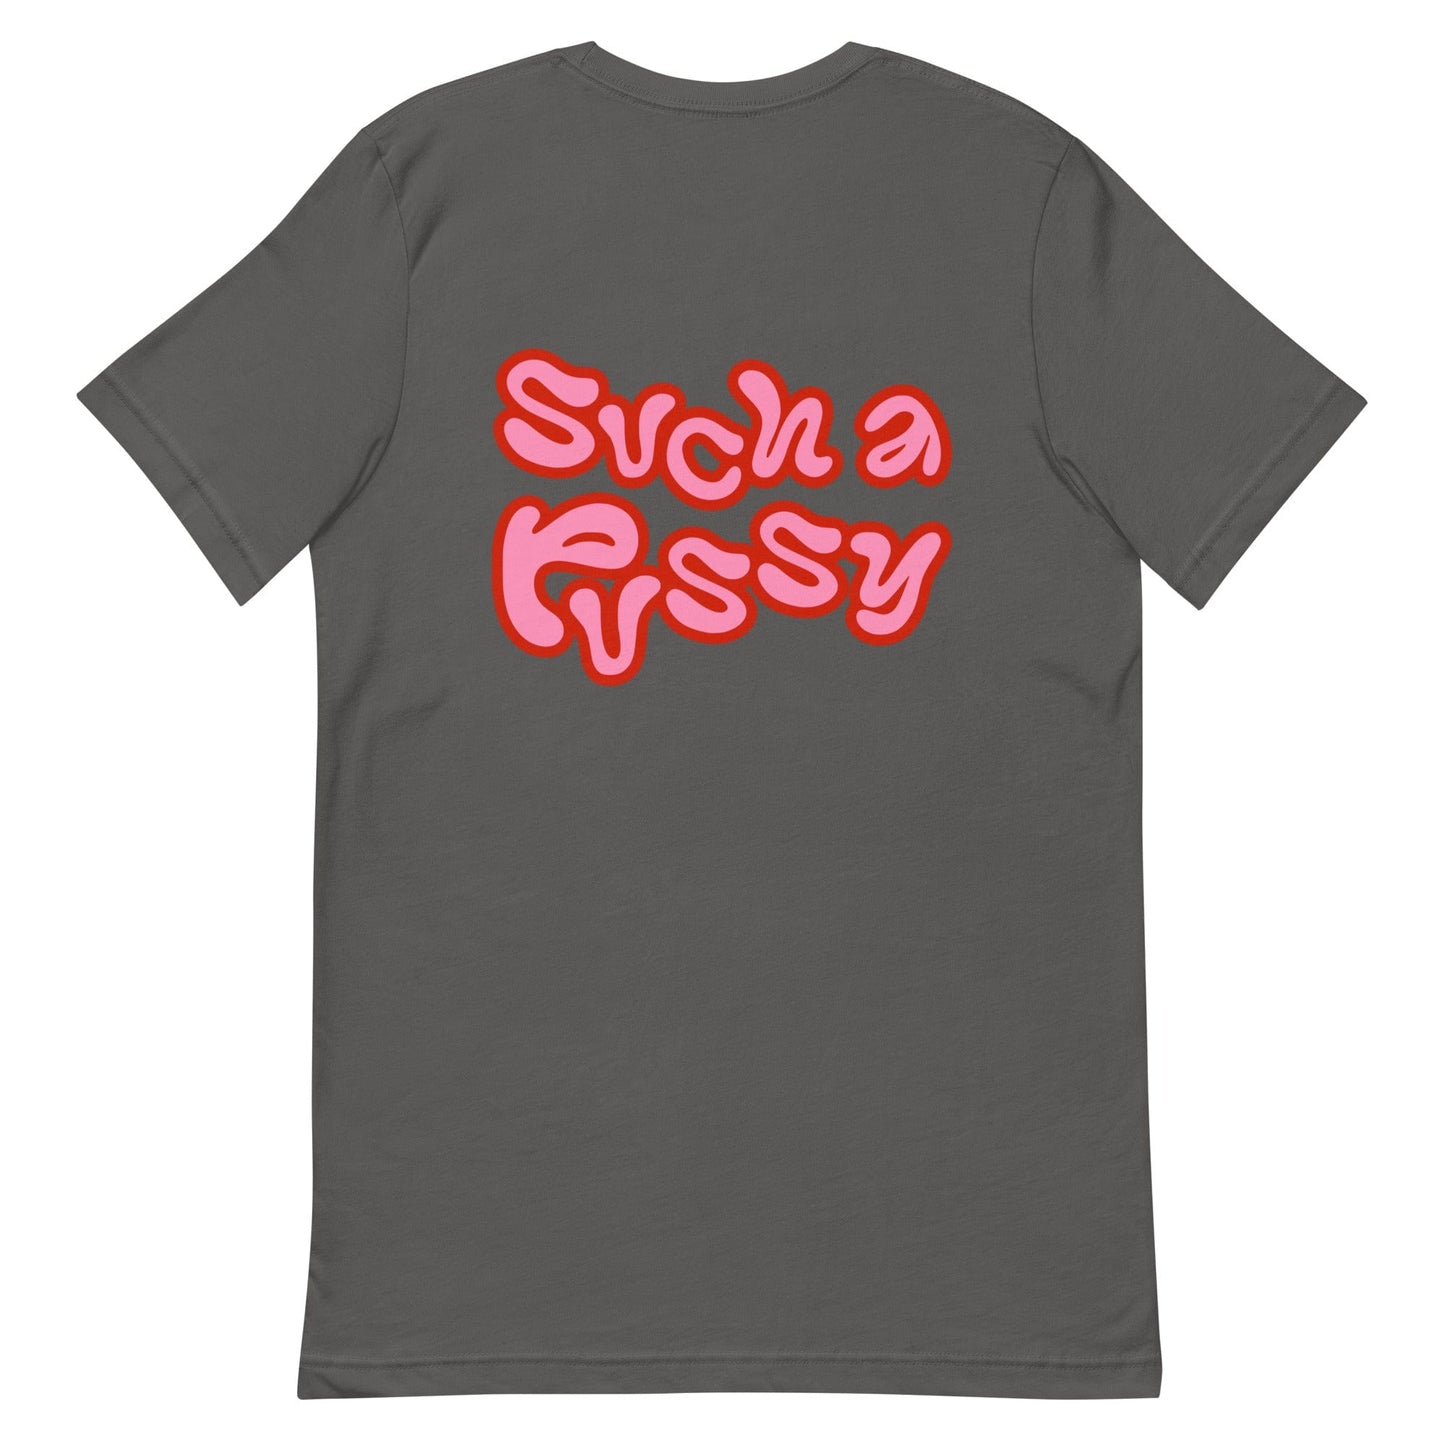 feminist-cotton-t-shirt-such-a-pussy-back-asphalt-black-by-feminist-define